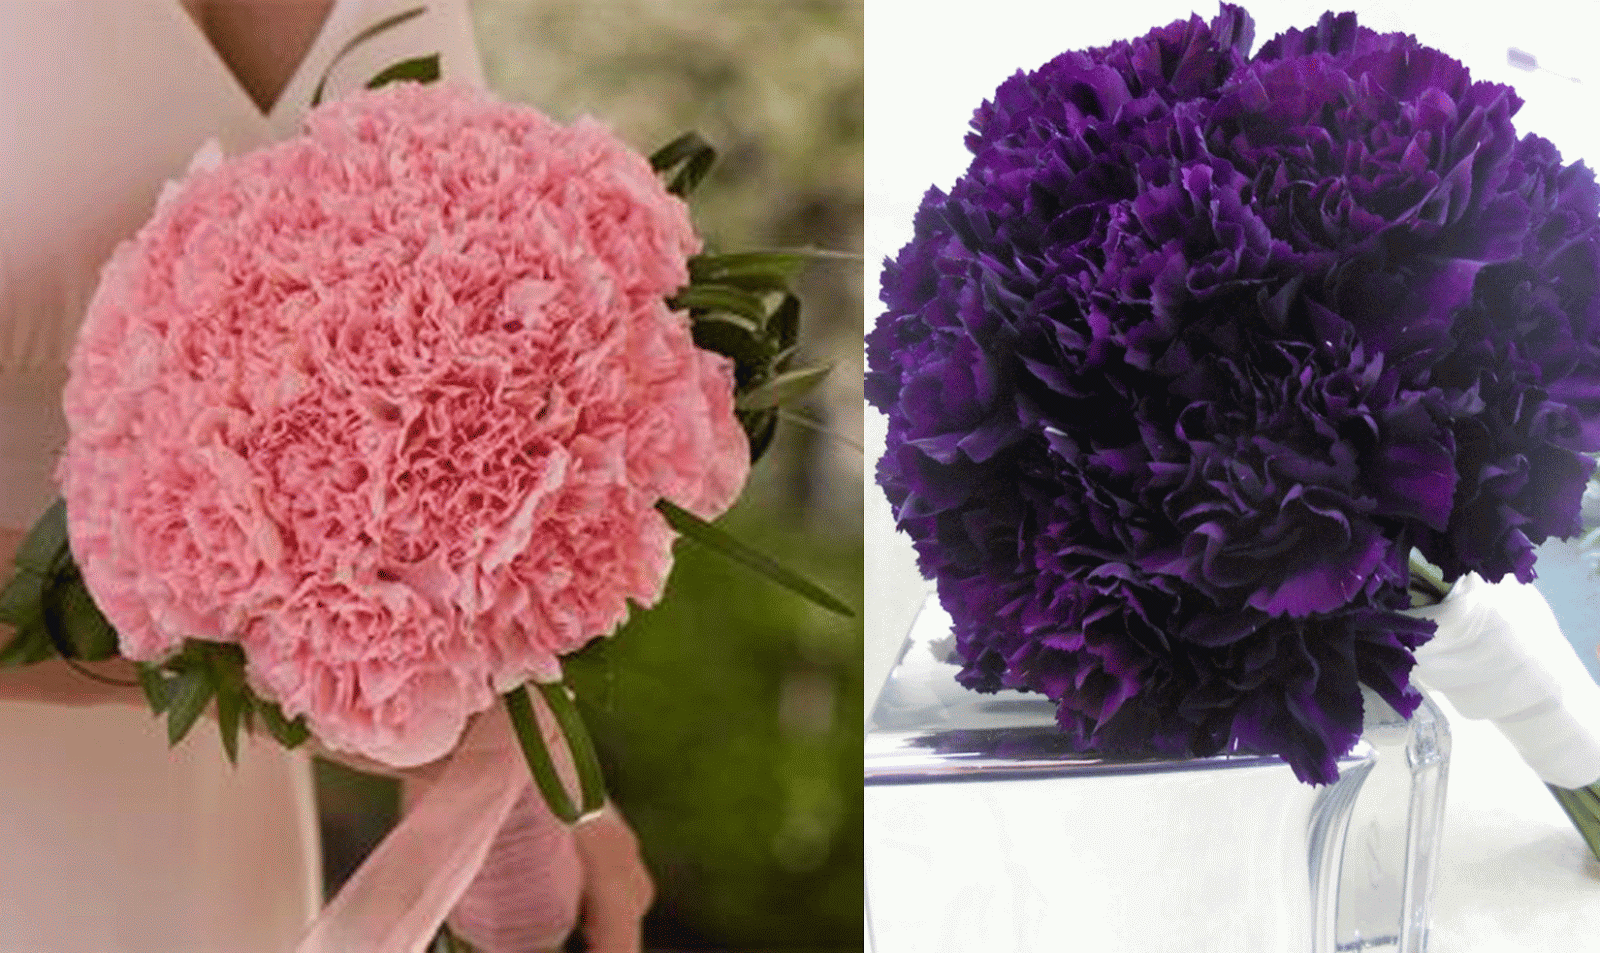 Ashley Thunder Events: Romantic Bouquet & Centerpiece Alternatives to Roses